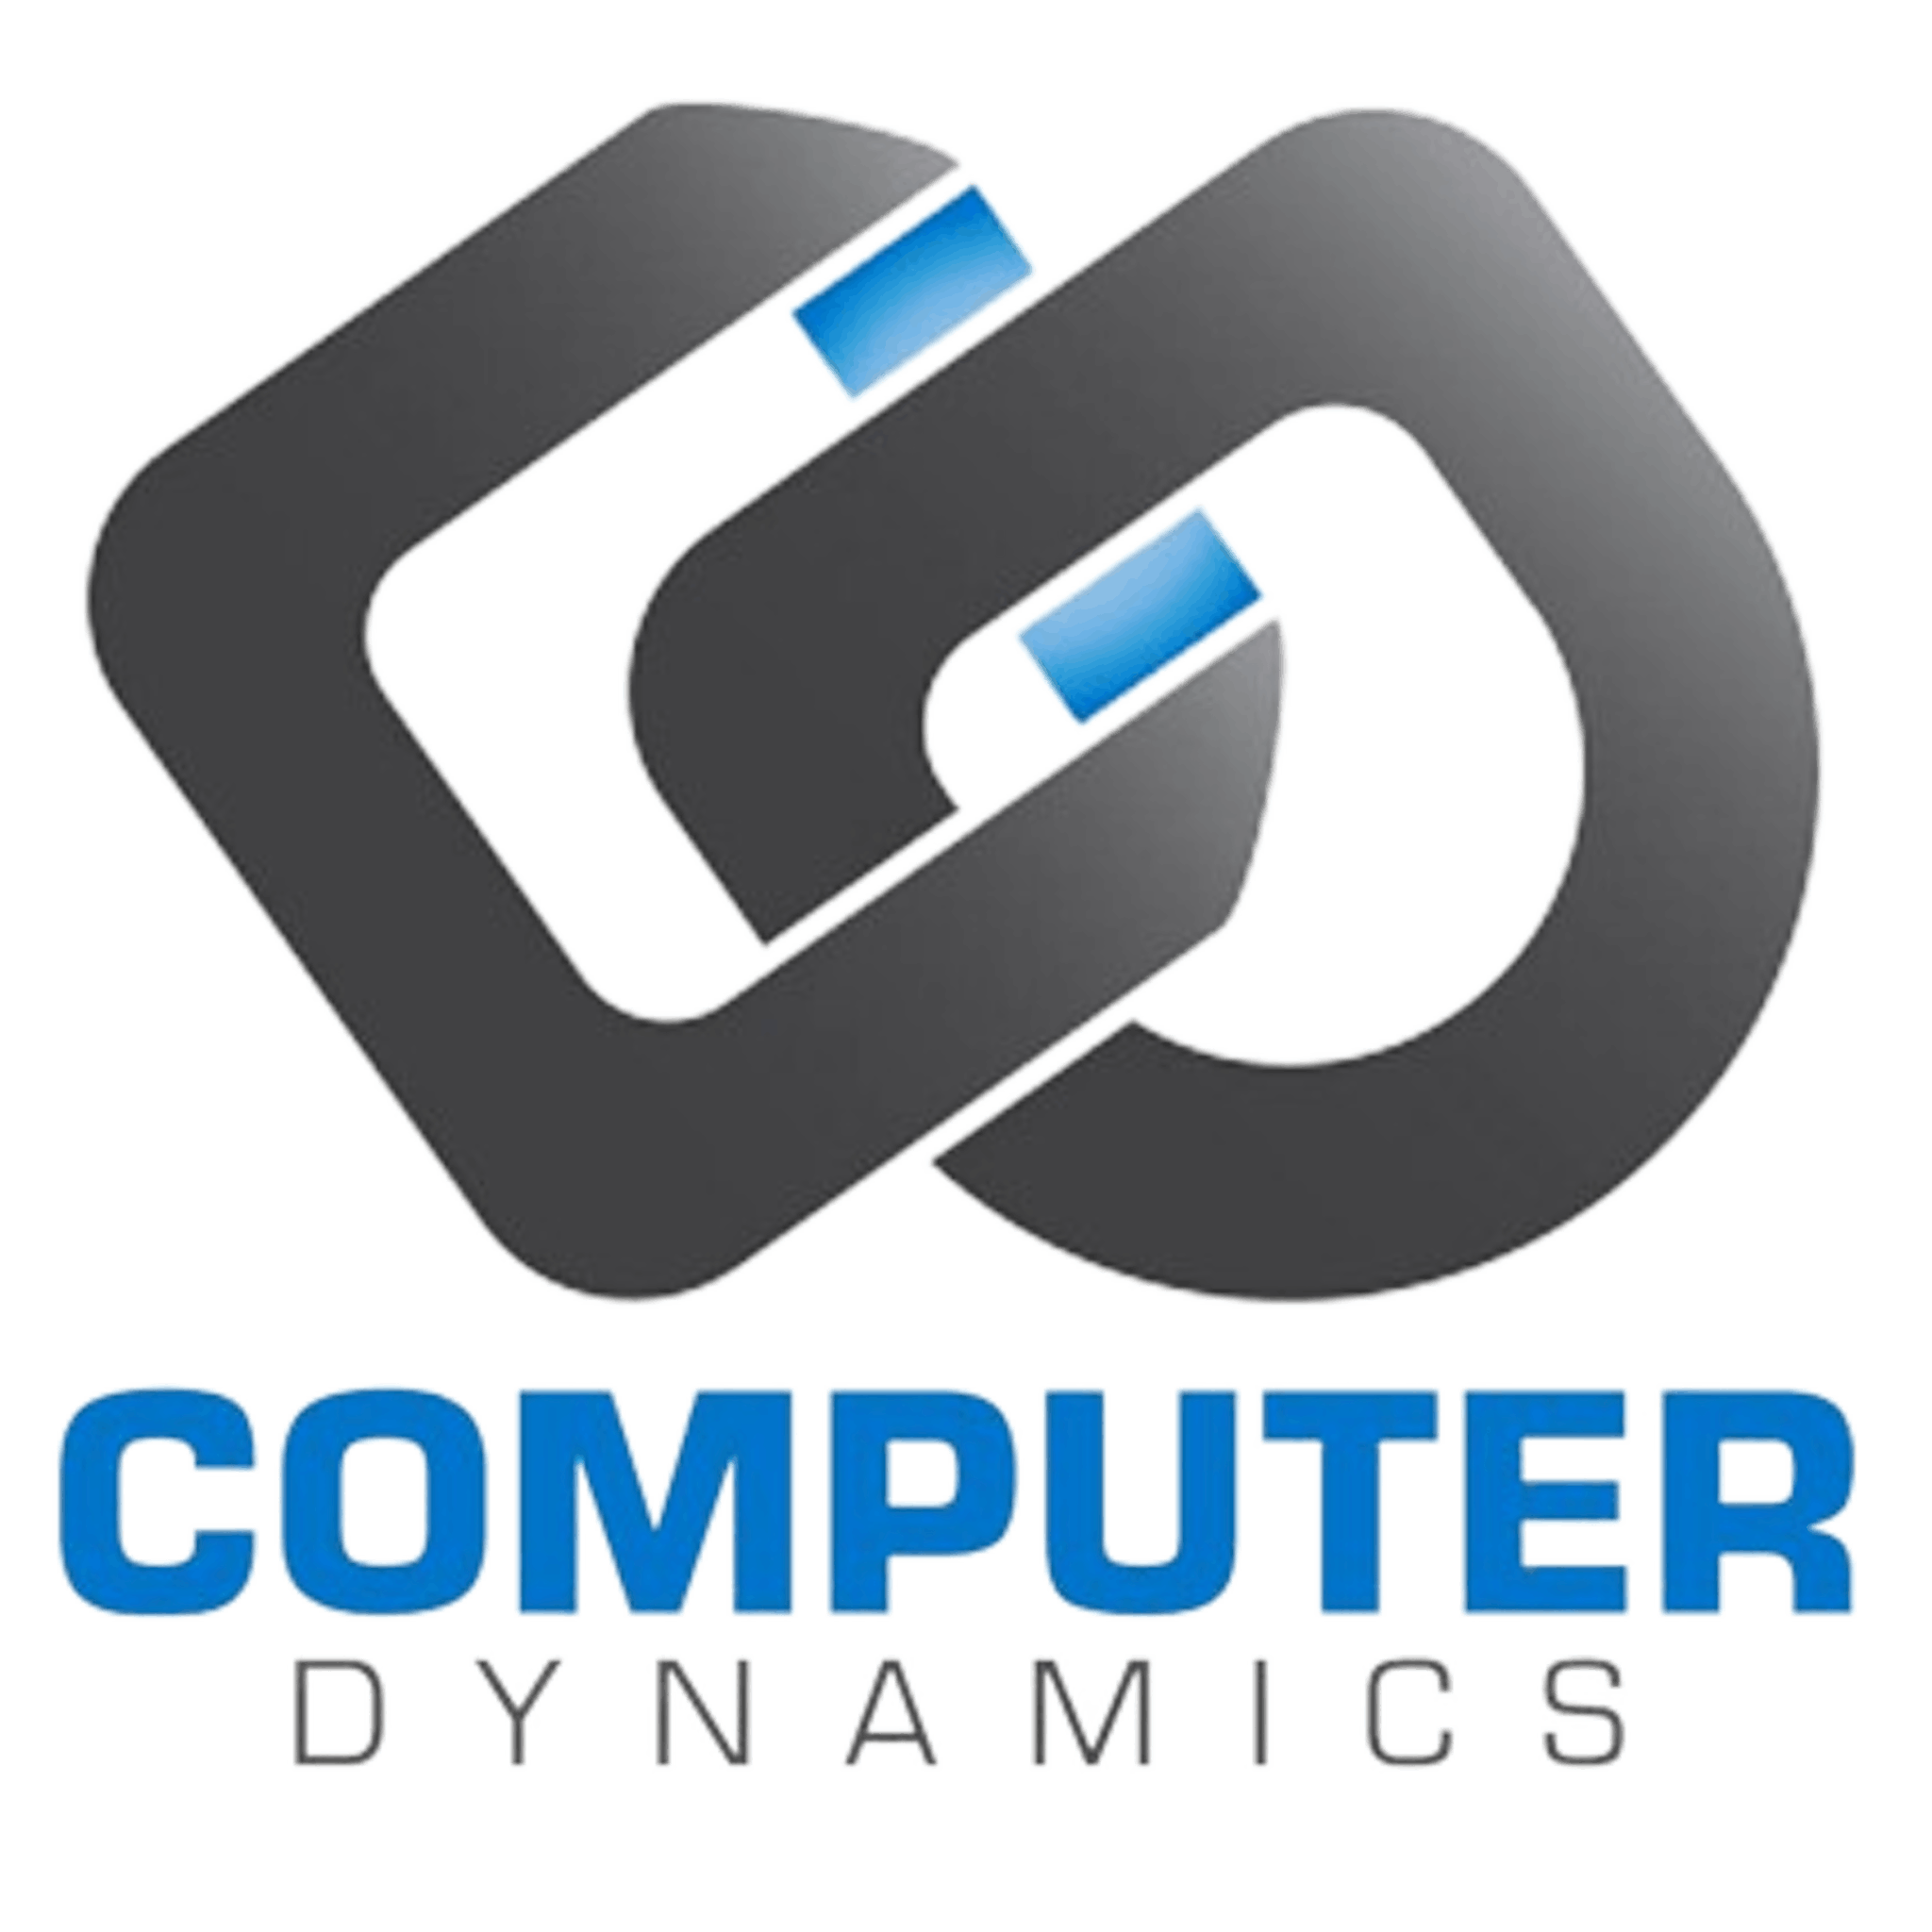 Computer Dynamics